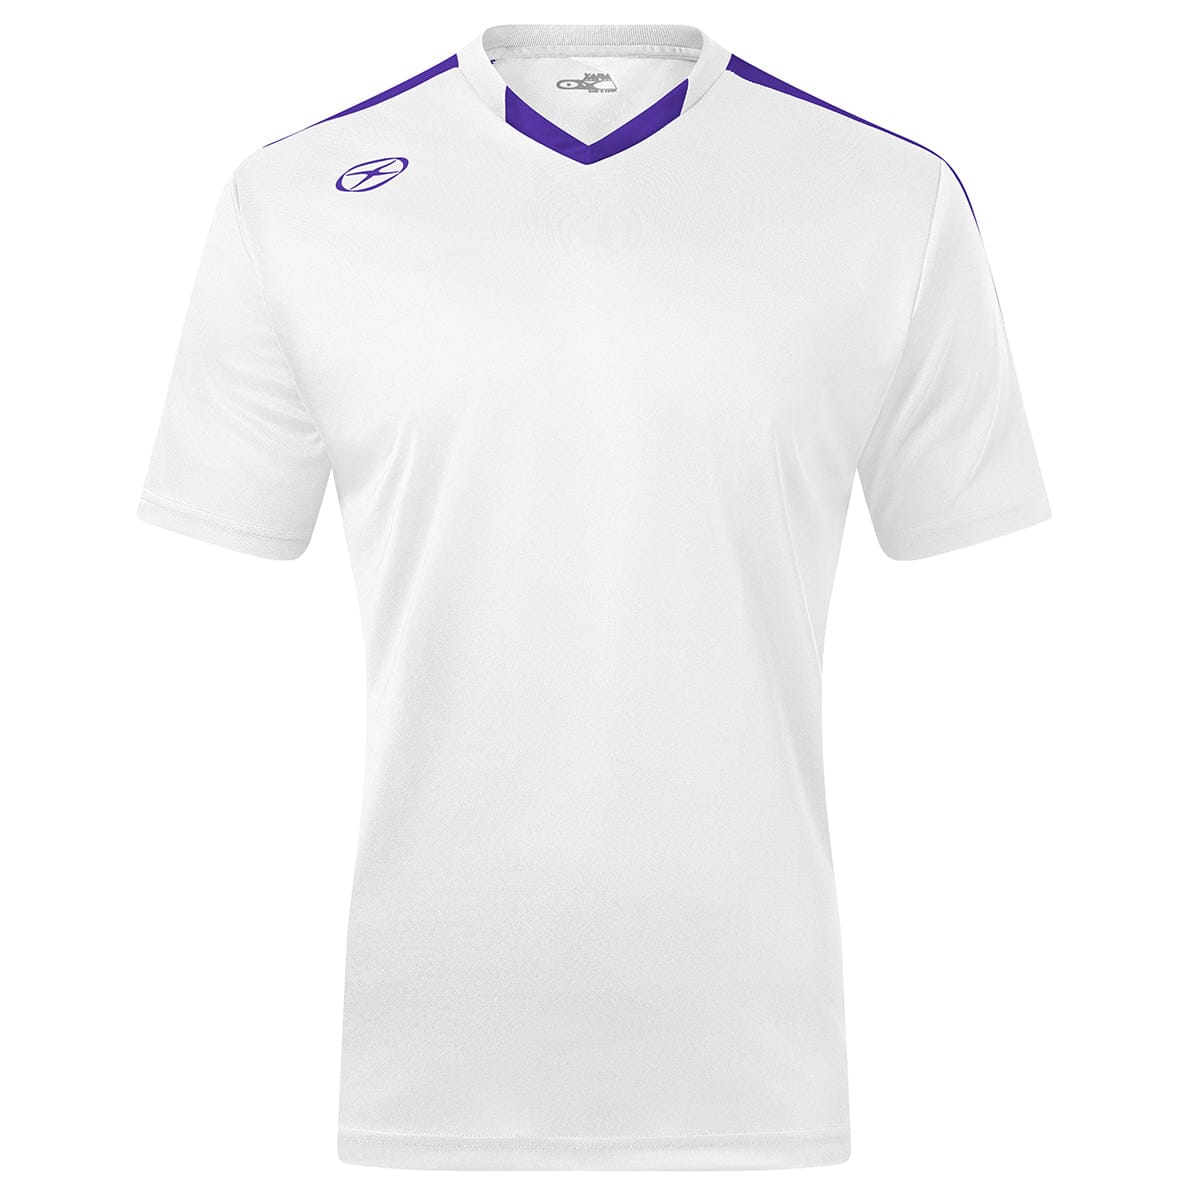 Britannia Jersey - Away Colors - Male Shirt Xara Soccer White/Purple Small 